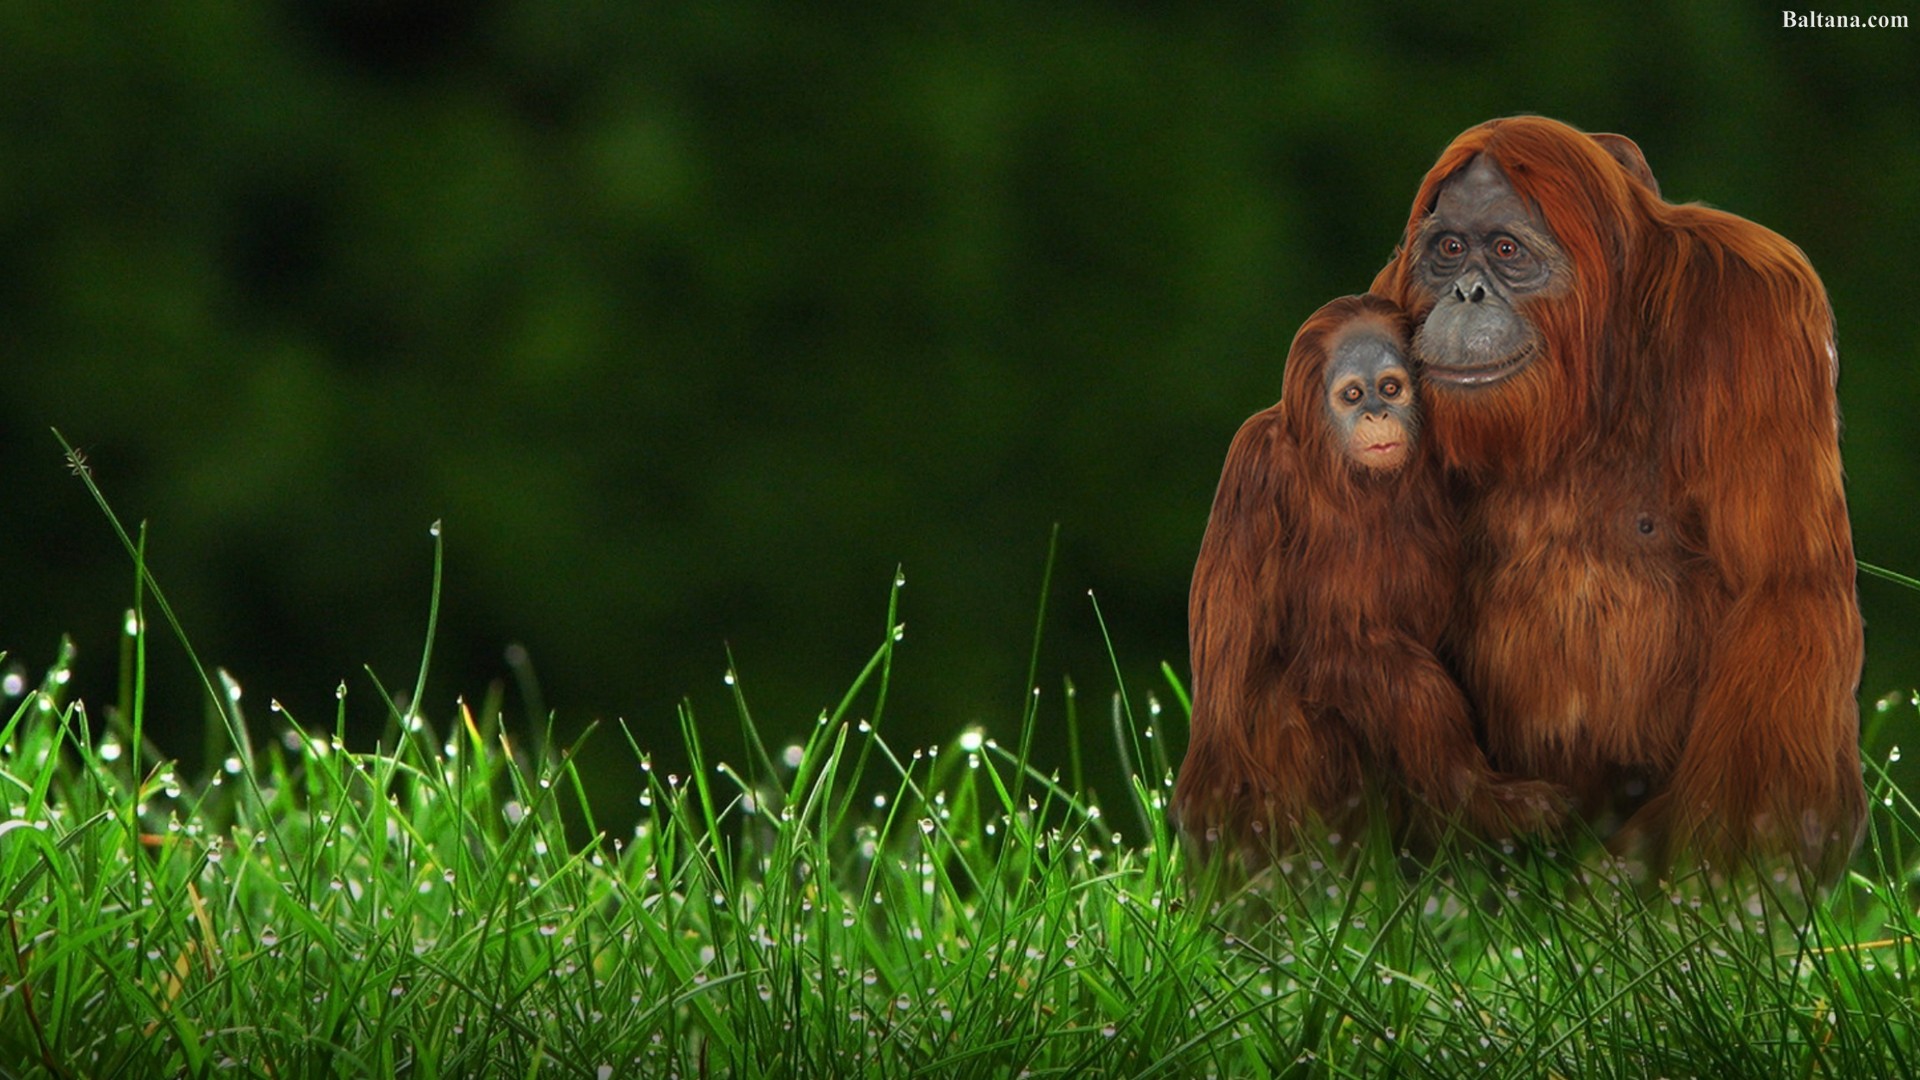 Orangutan Wallpaper HD Background Image Pics Photos